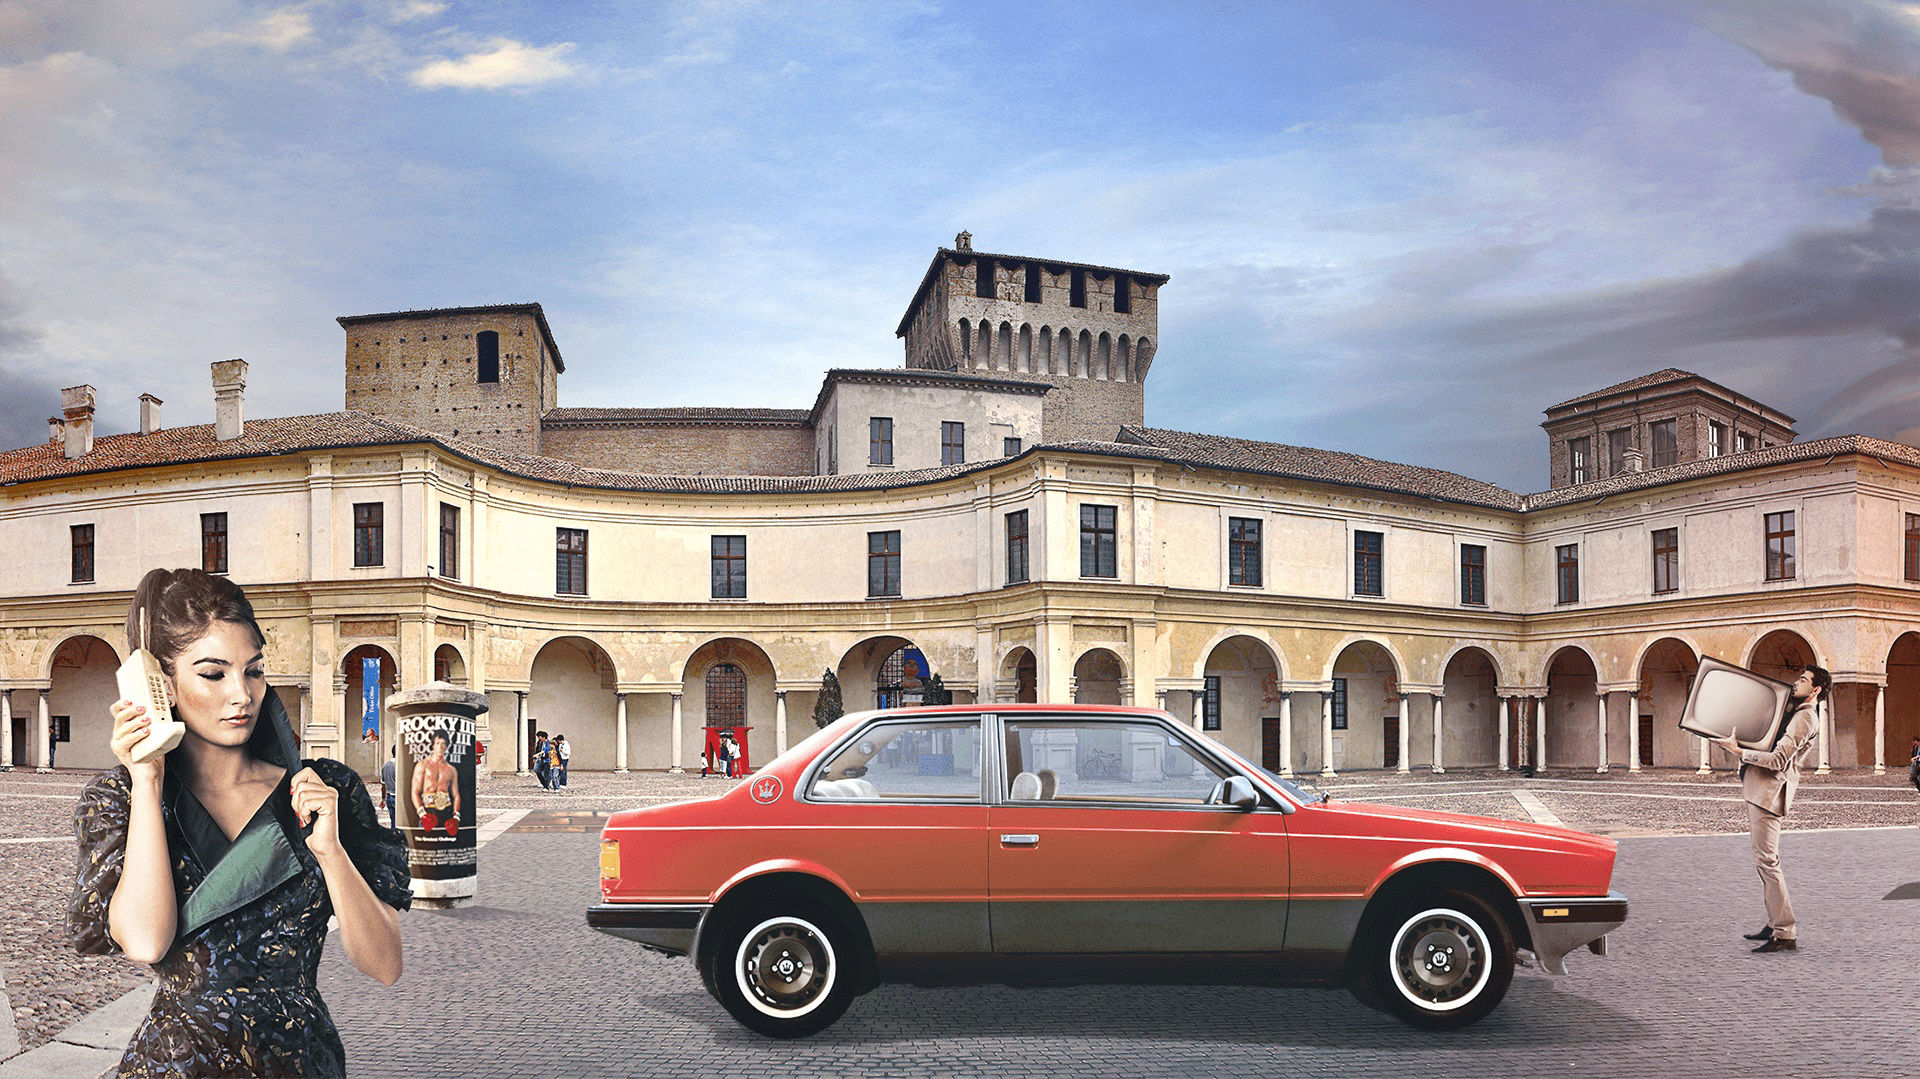 Storia di Maserati - 1980: Maserati Biturbo in una città italiana